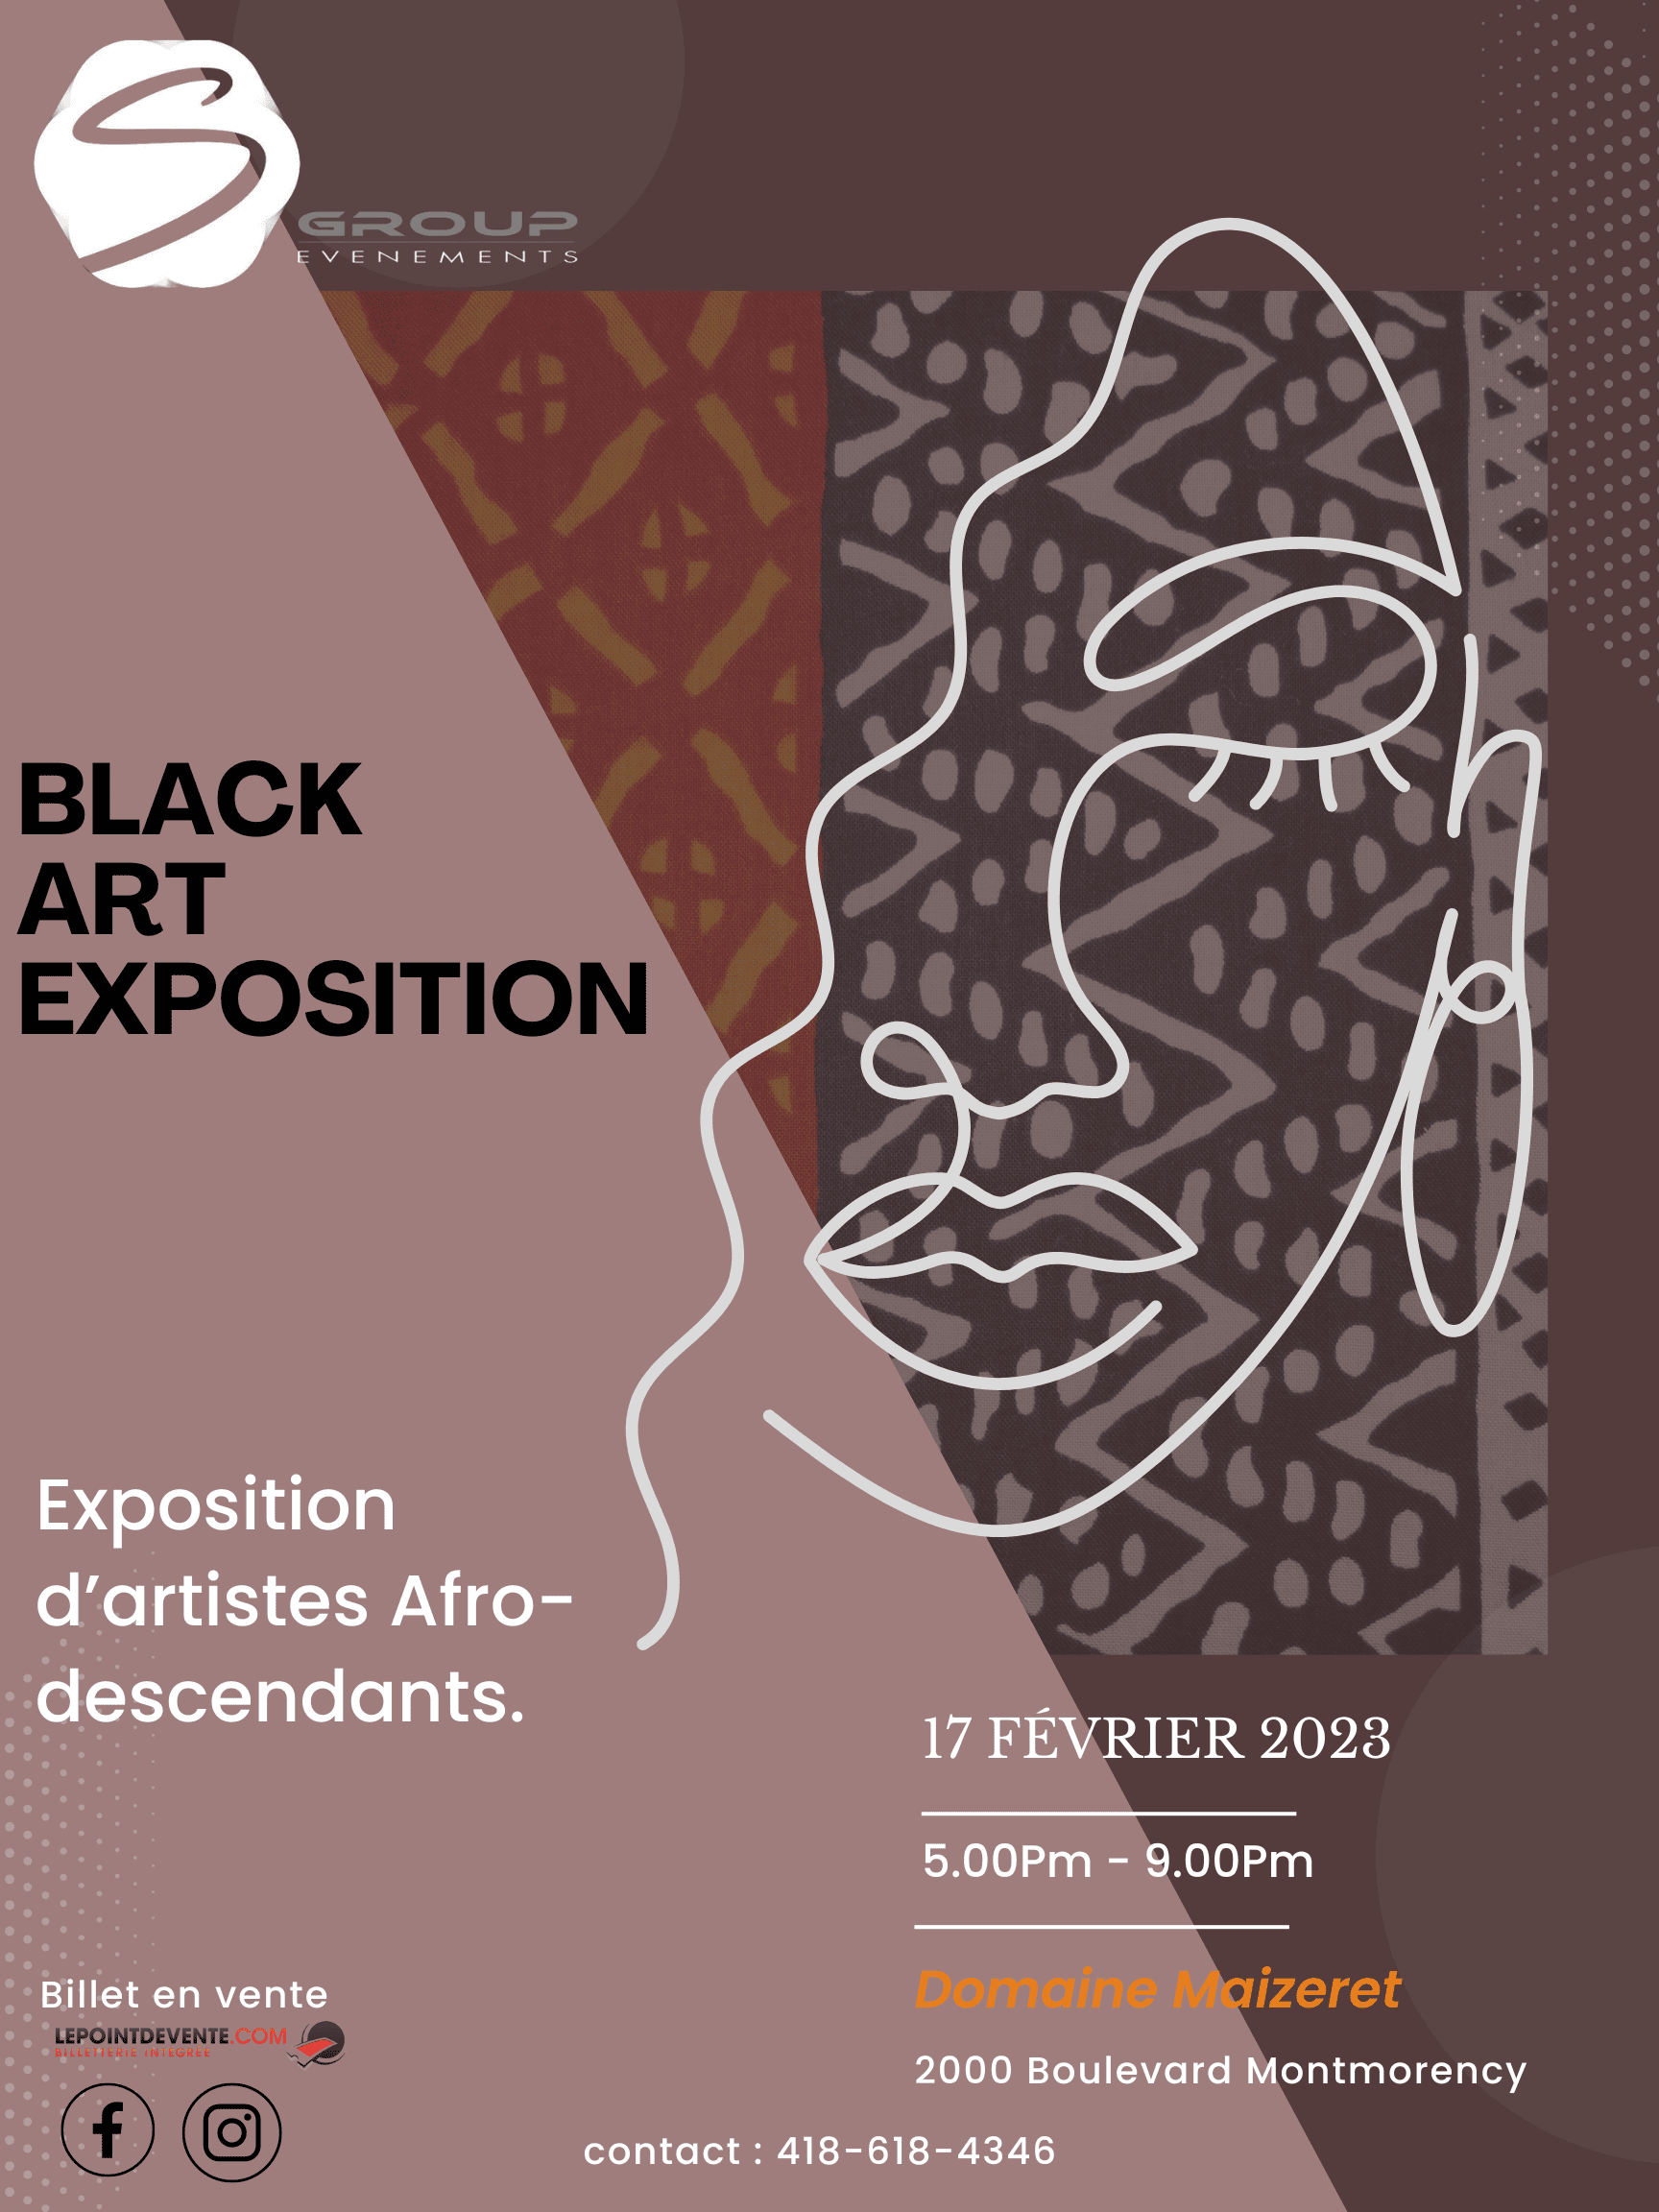 THE BLACK ART EXPOSITION